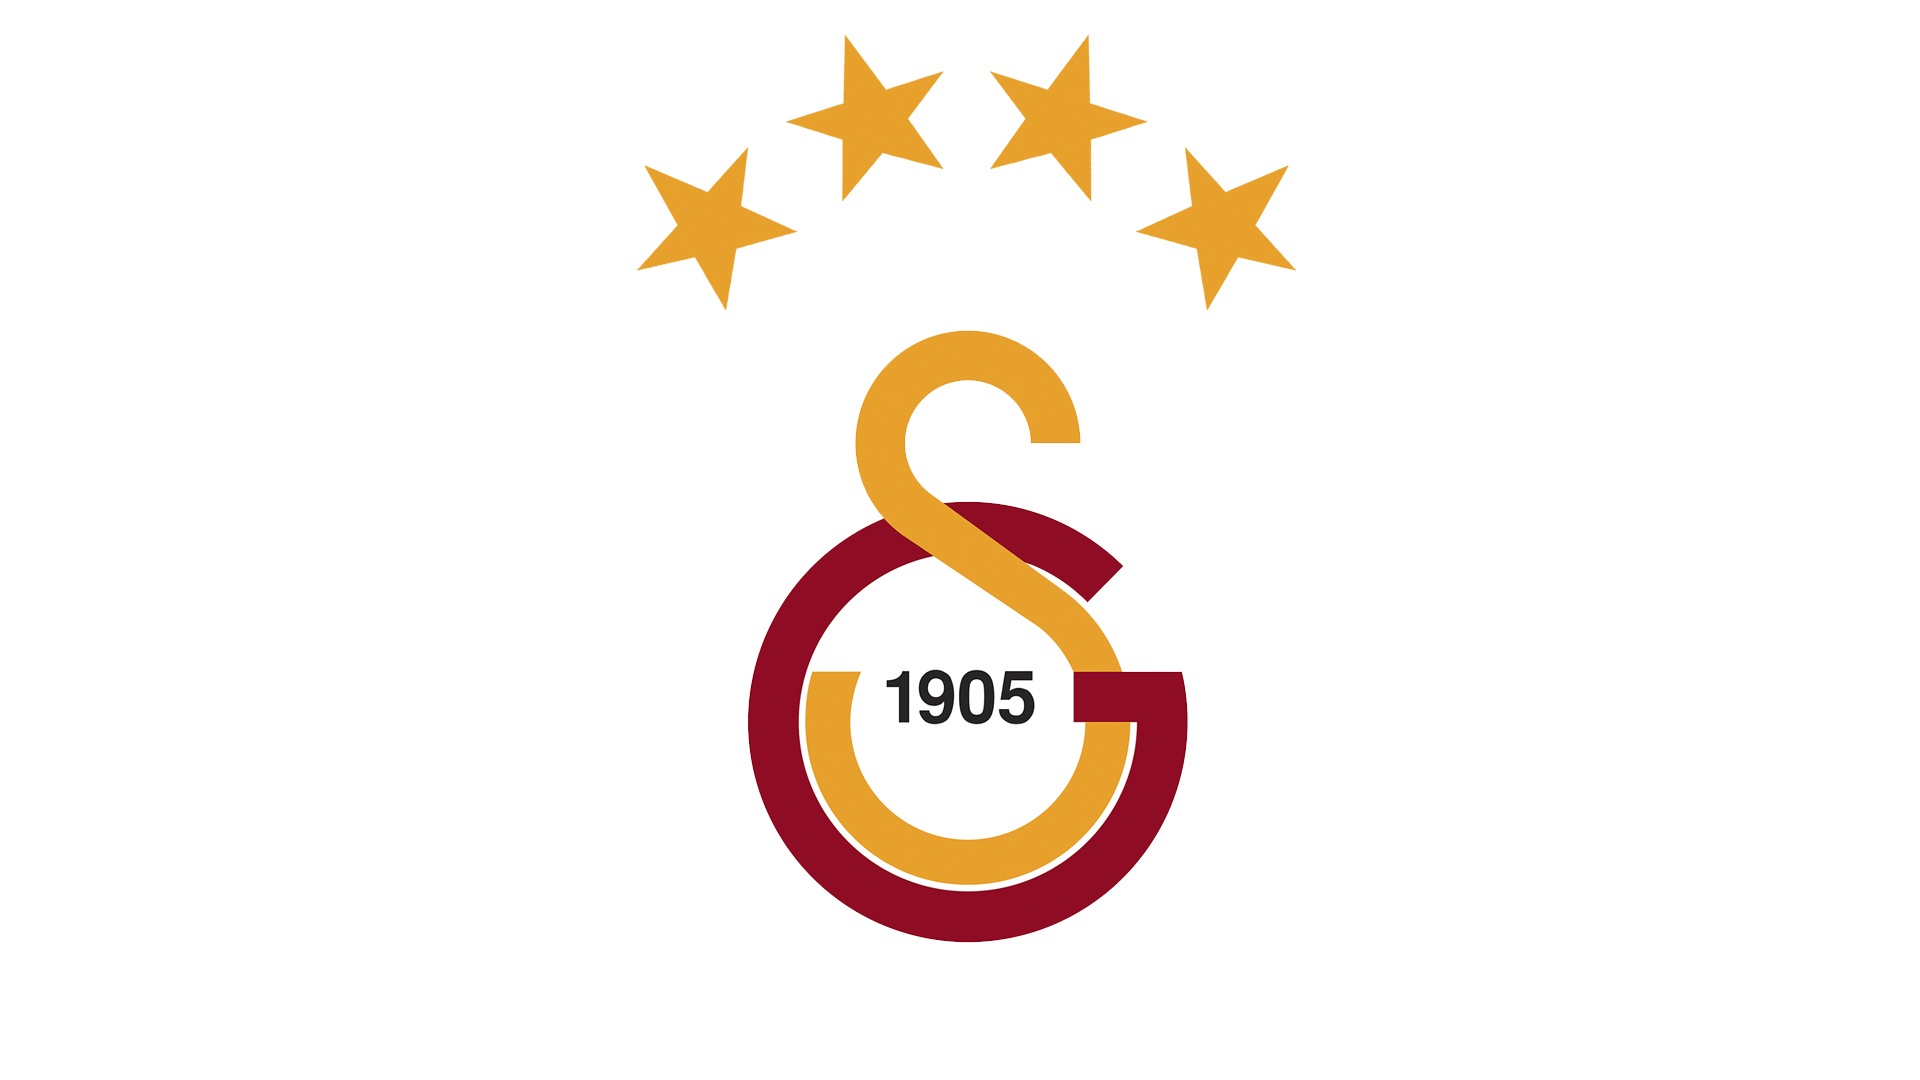 Galatasaray logo : histoire, signification et évolution, symbole